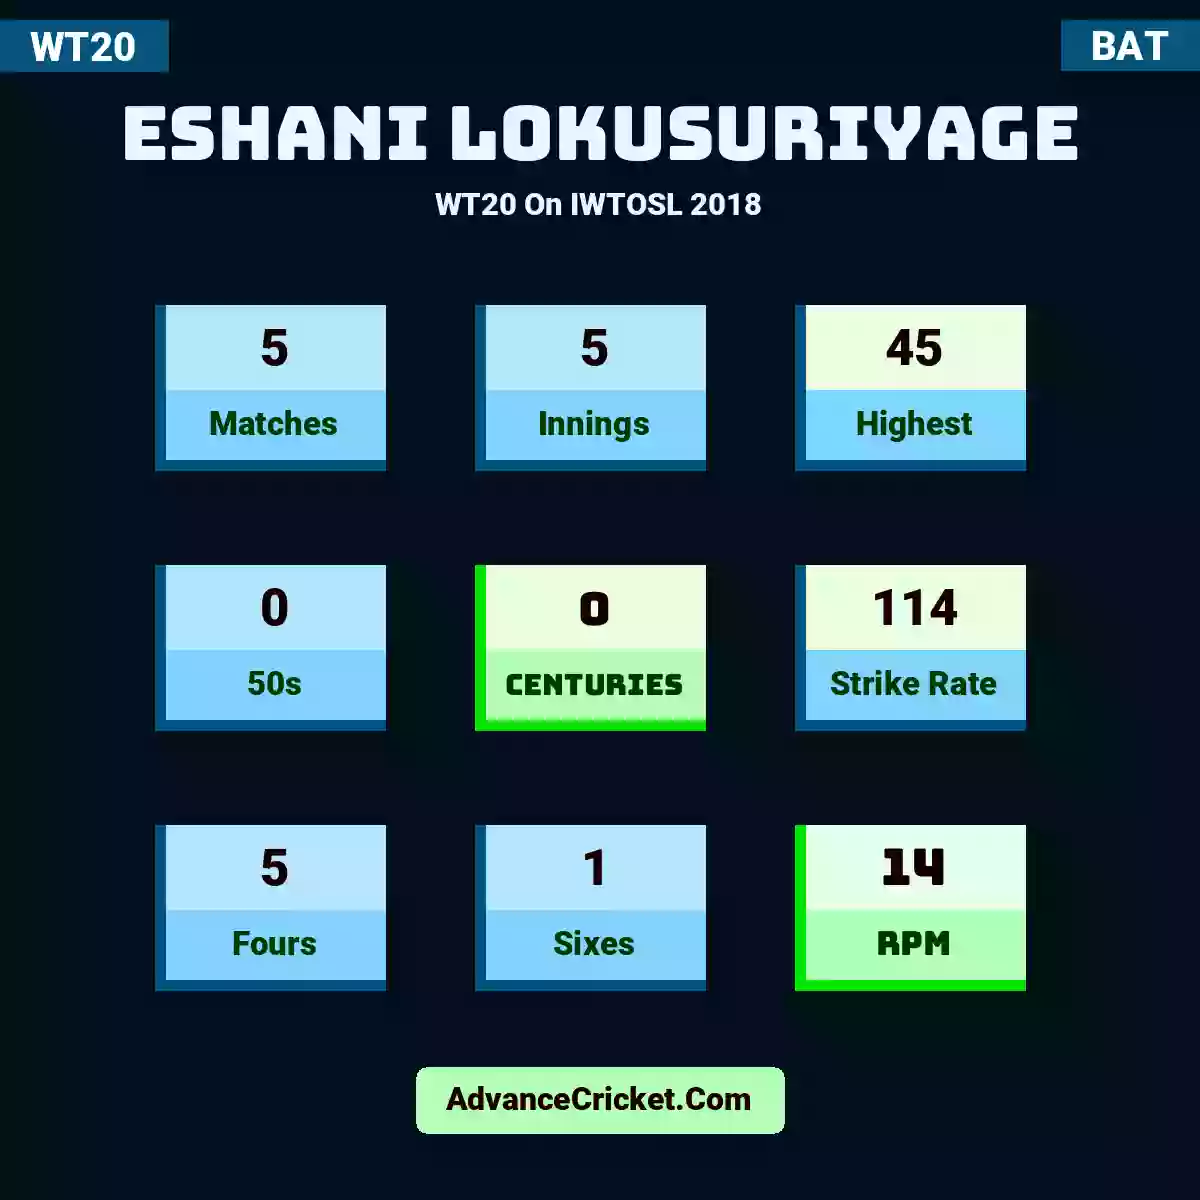 Eshani Lokusuriyage WT20  On IWTOSL 2018, Eshani Lokusuriyage played 5 matches, scored 45 runs as highest, 0 half-centuries, and 0 centuries, with a strike rate of 114. E.Lokusuriyage hit 5 fours and 1 sixes, with an RPM of 14.